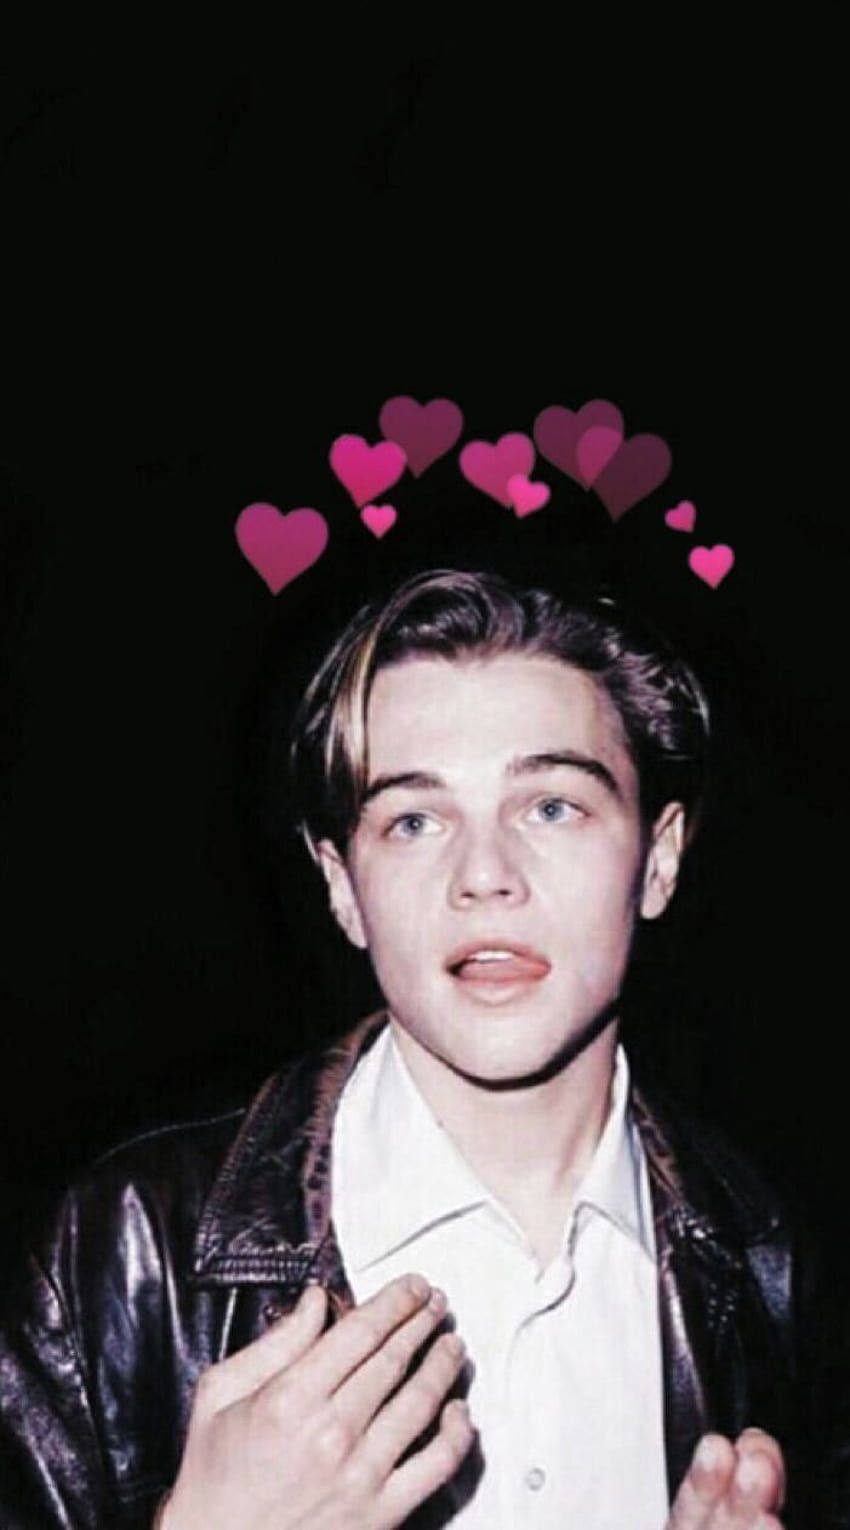 Leonardo DiCaprio wallpaper with hearts above his head - Leonardo DiCaprio